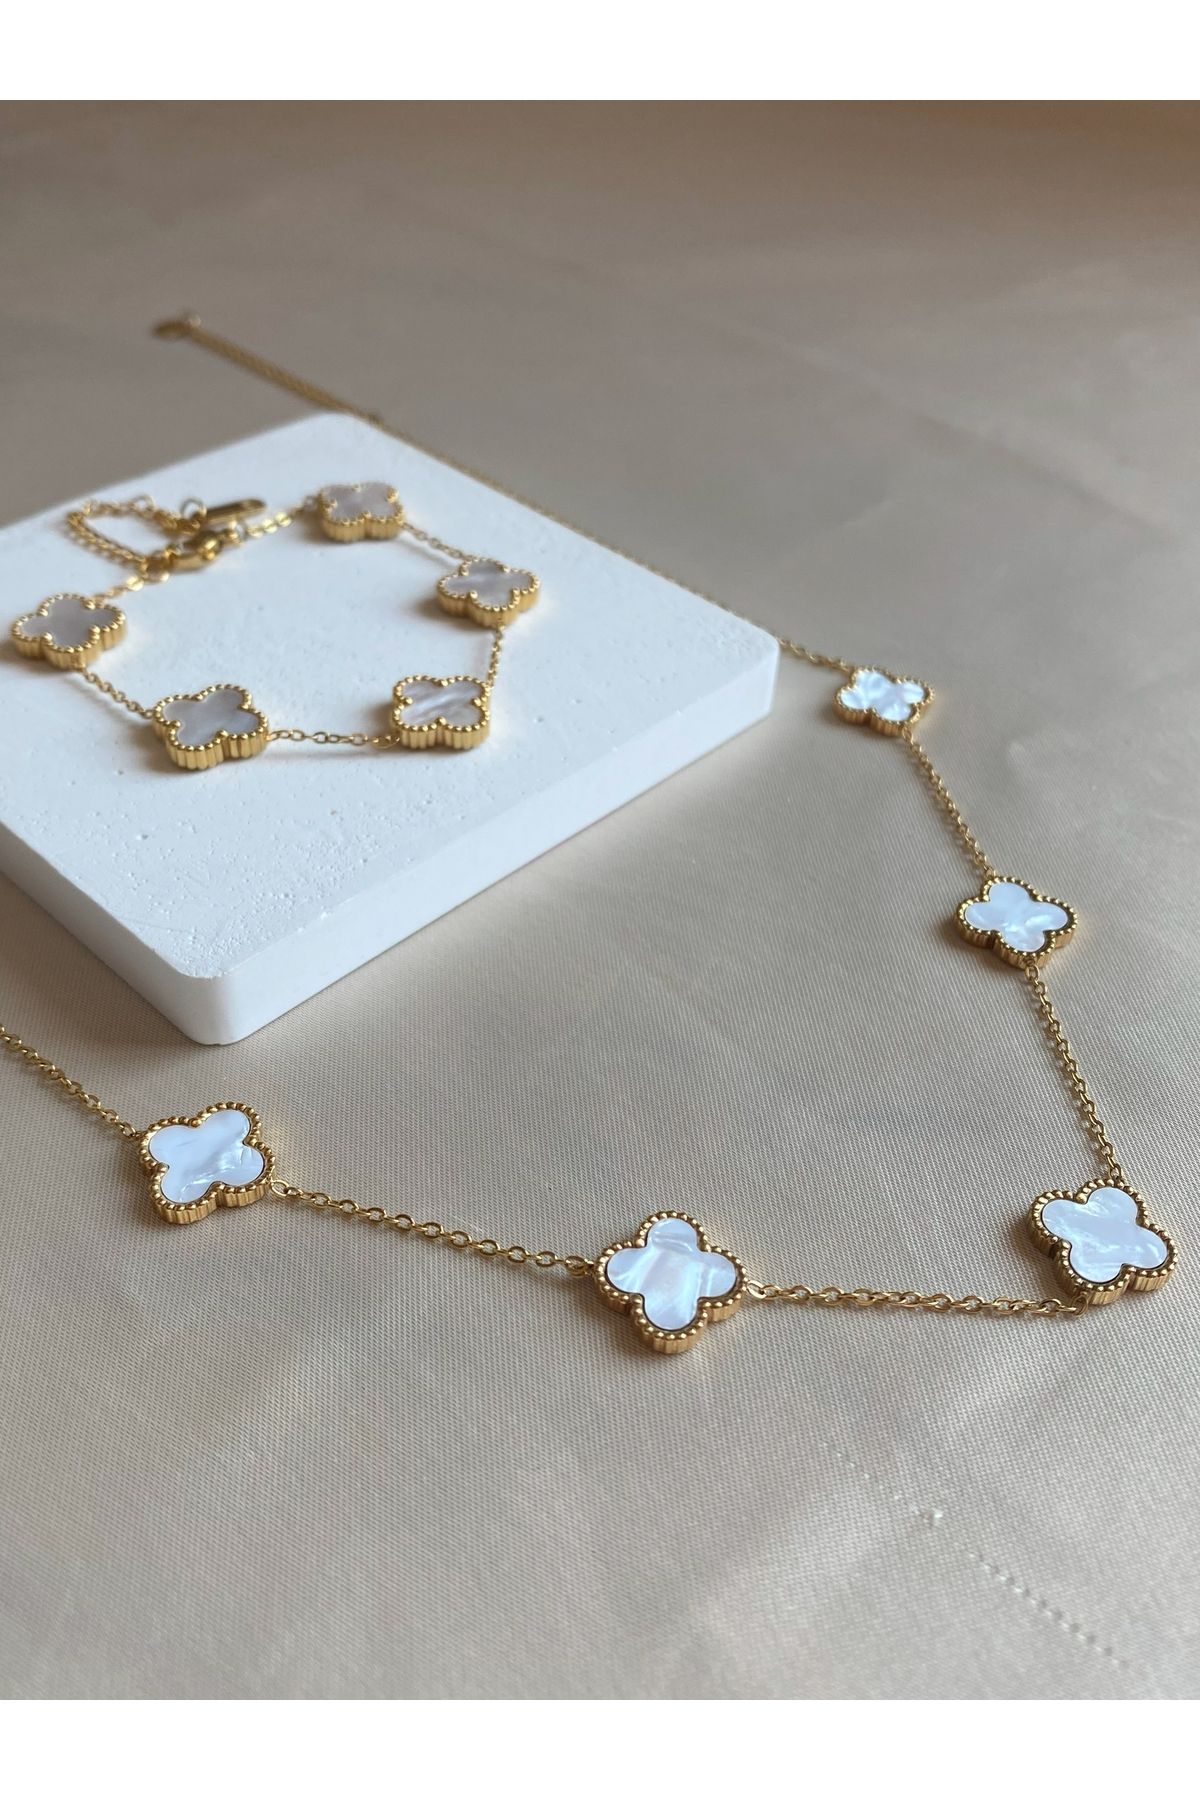 Inure Jewelry Matchless Van Cleef Beyaz Sedef Taşlı Gold Yonca Model Çelik (KOLYE & BİLEKLİK) 2'li Set